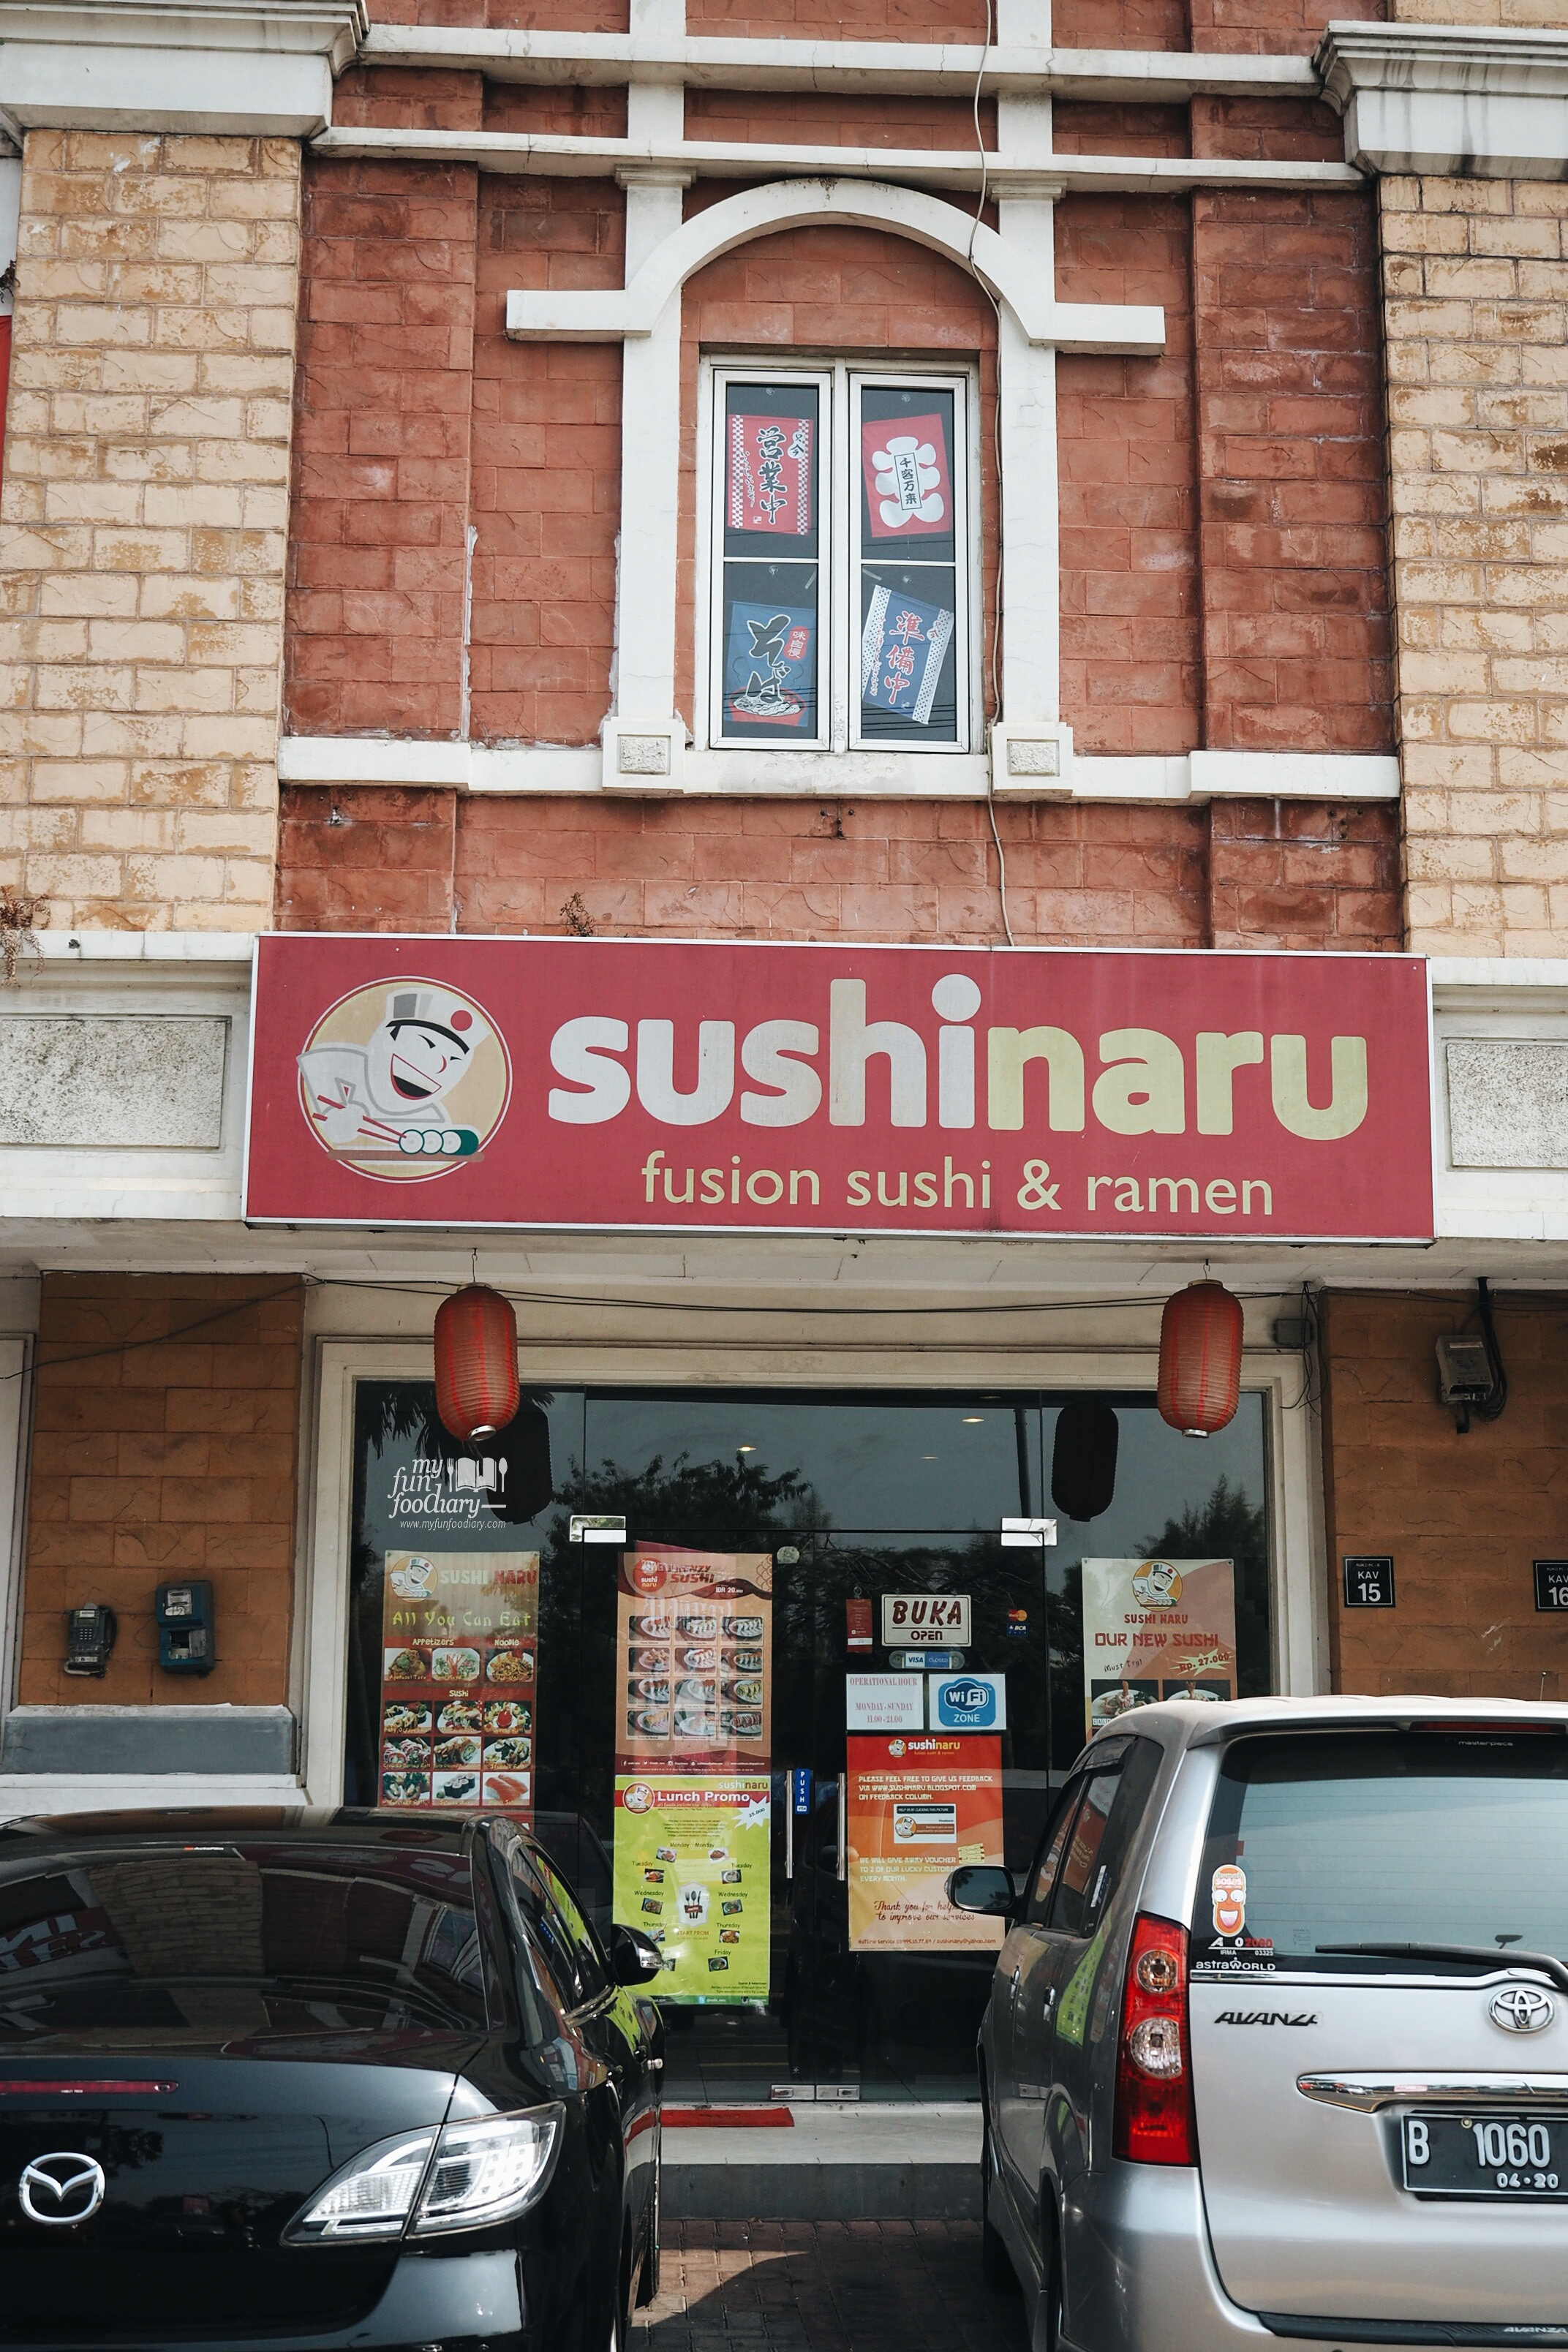 Exterior Sushi Naru by Myfunfoodiary